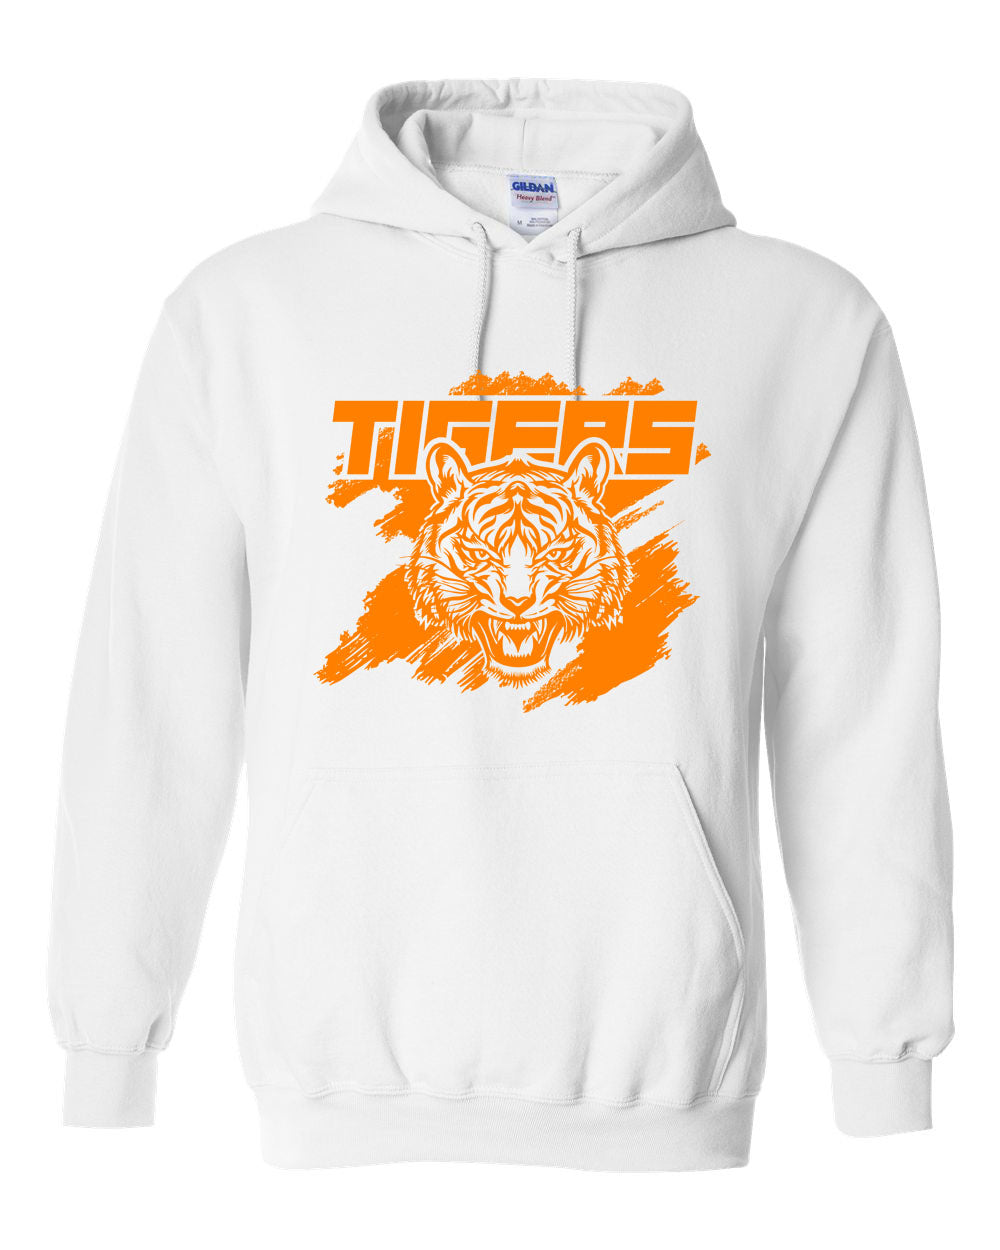 Tigers Hooded Sweatshirt